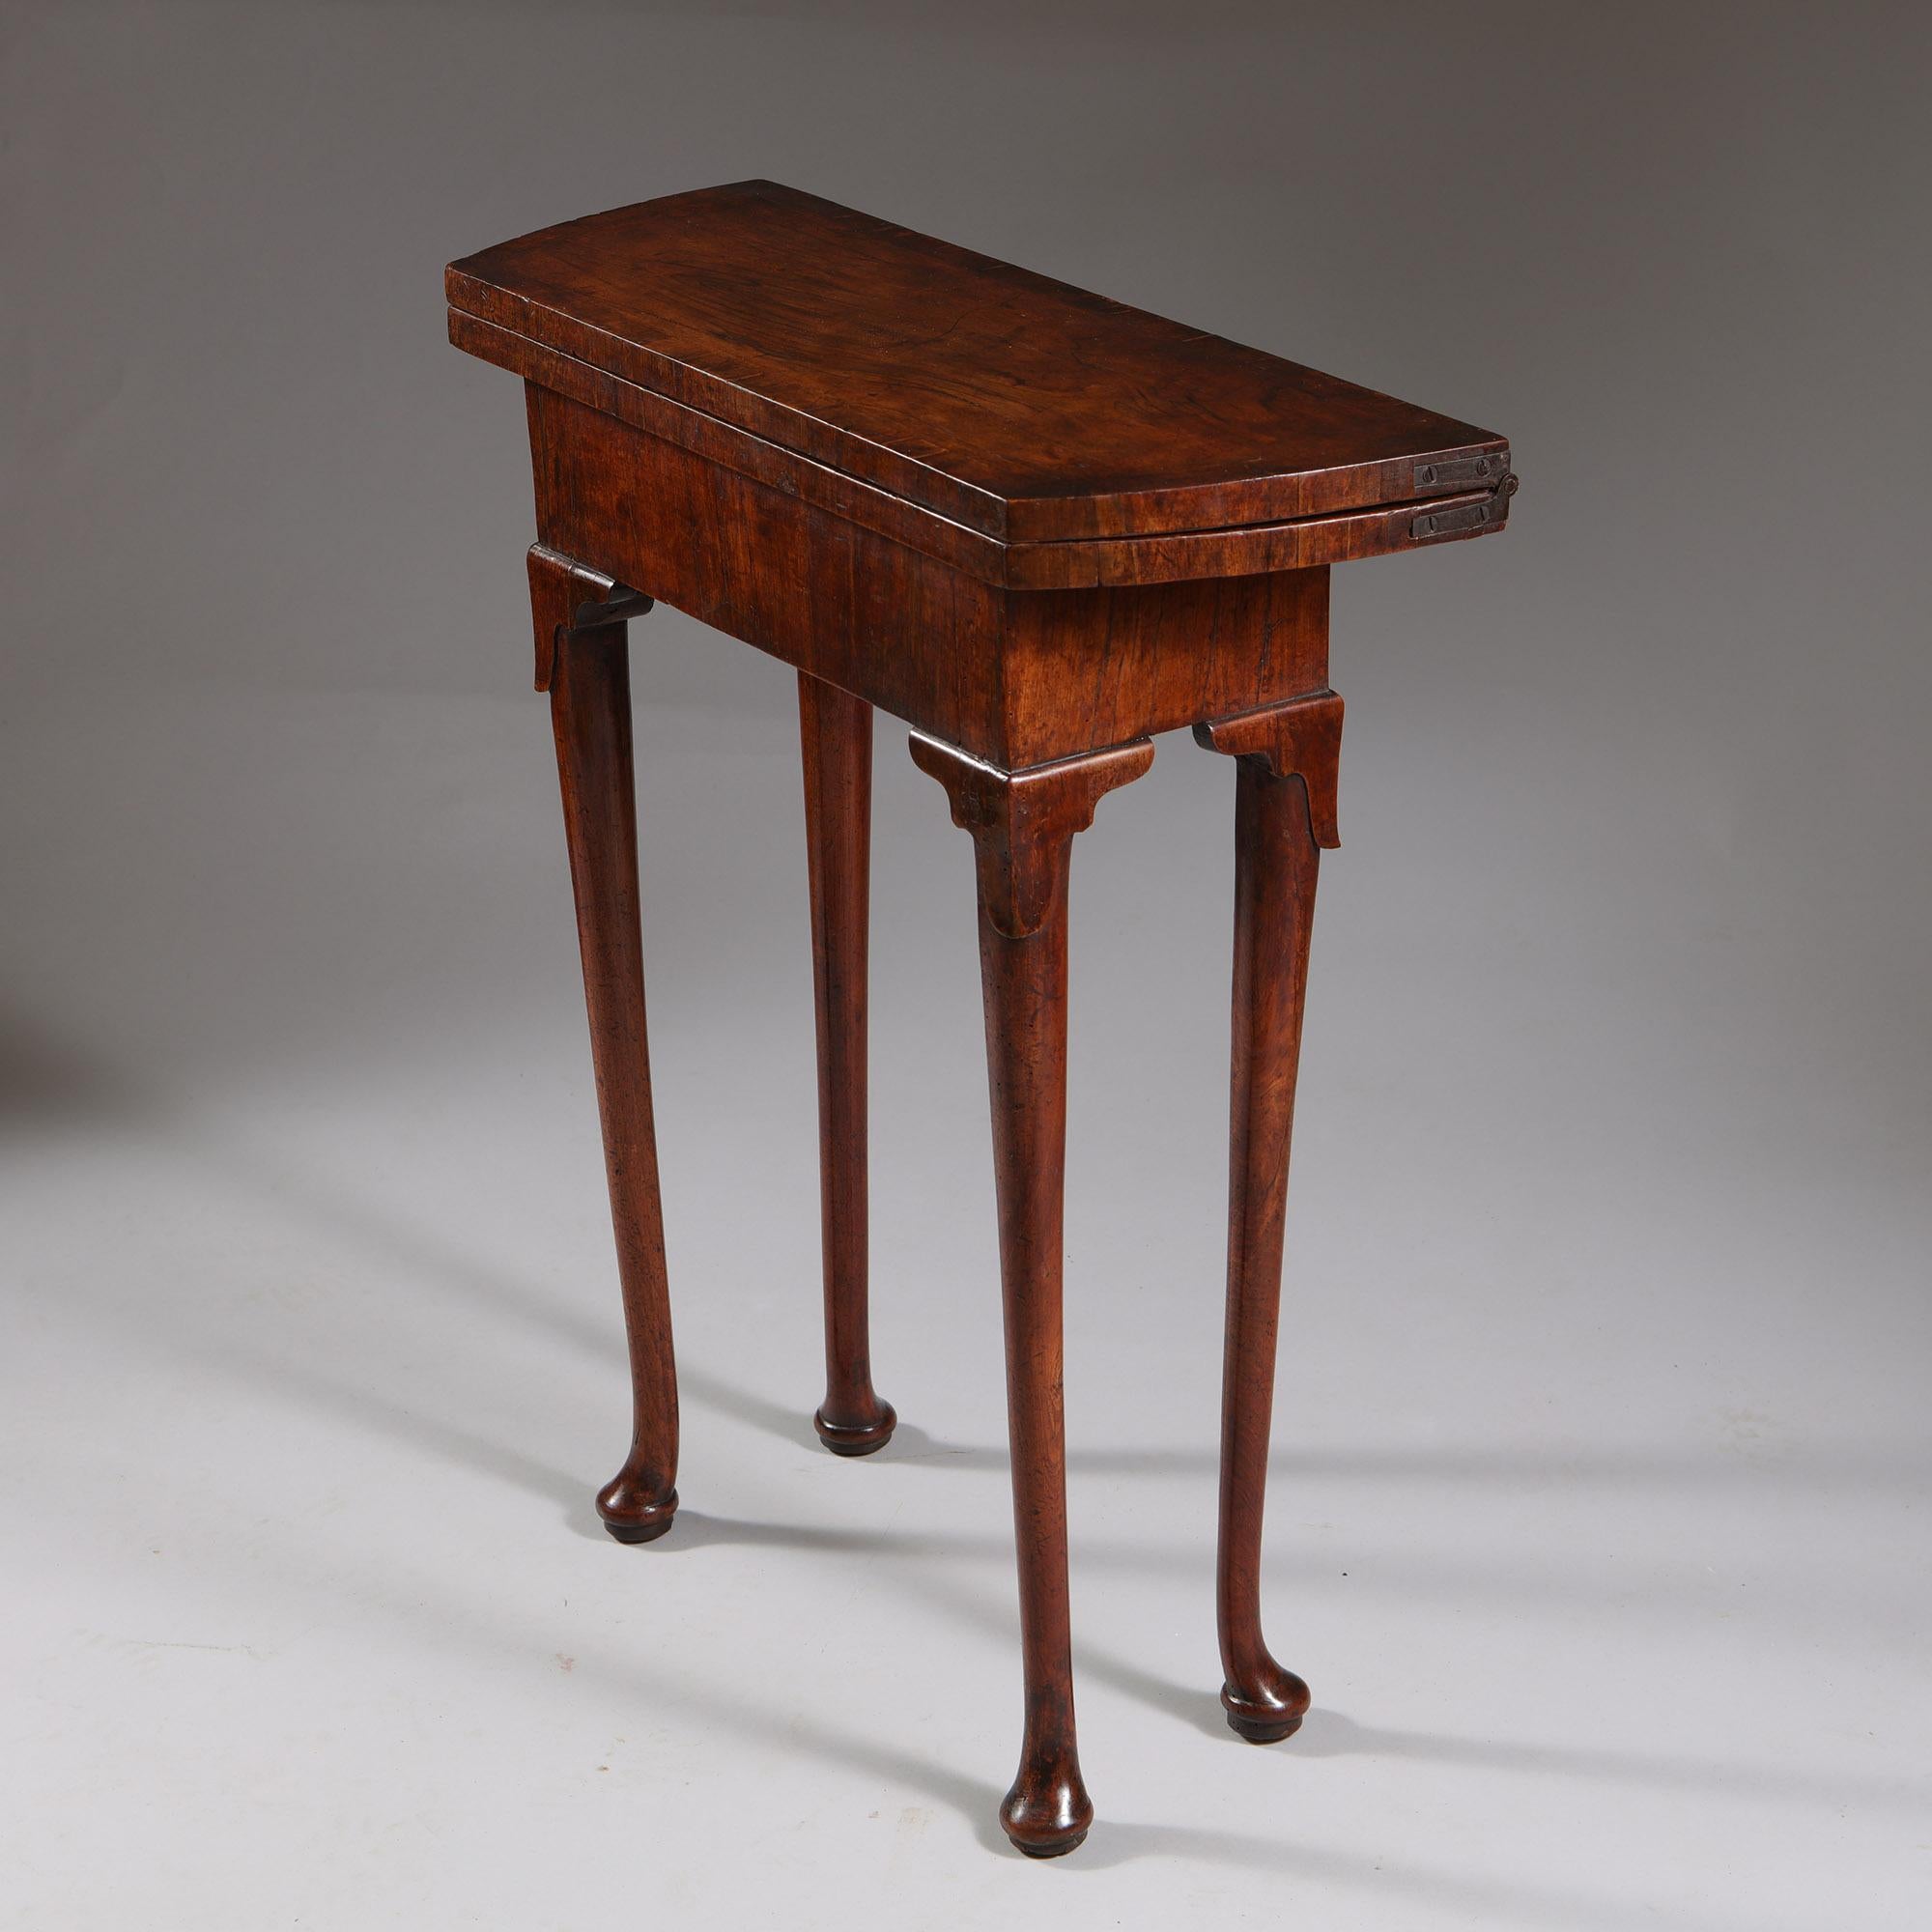 A Unique Early 18th Century Diminutive George I Figured Walnut Bachelors Table-4